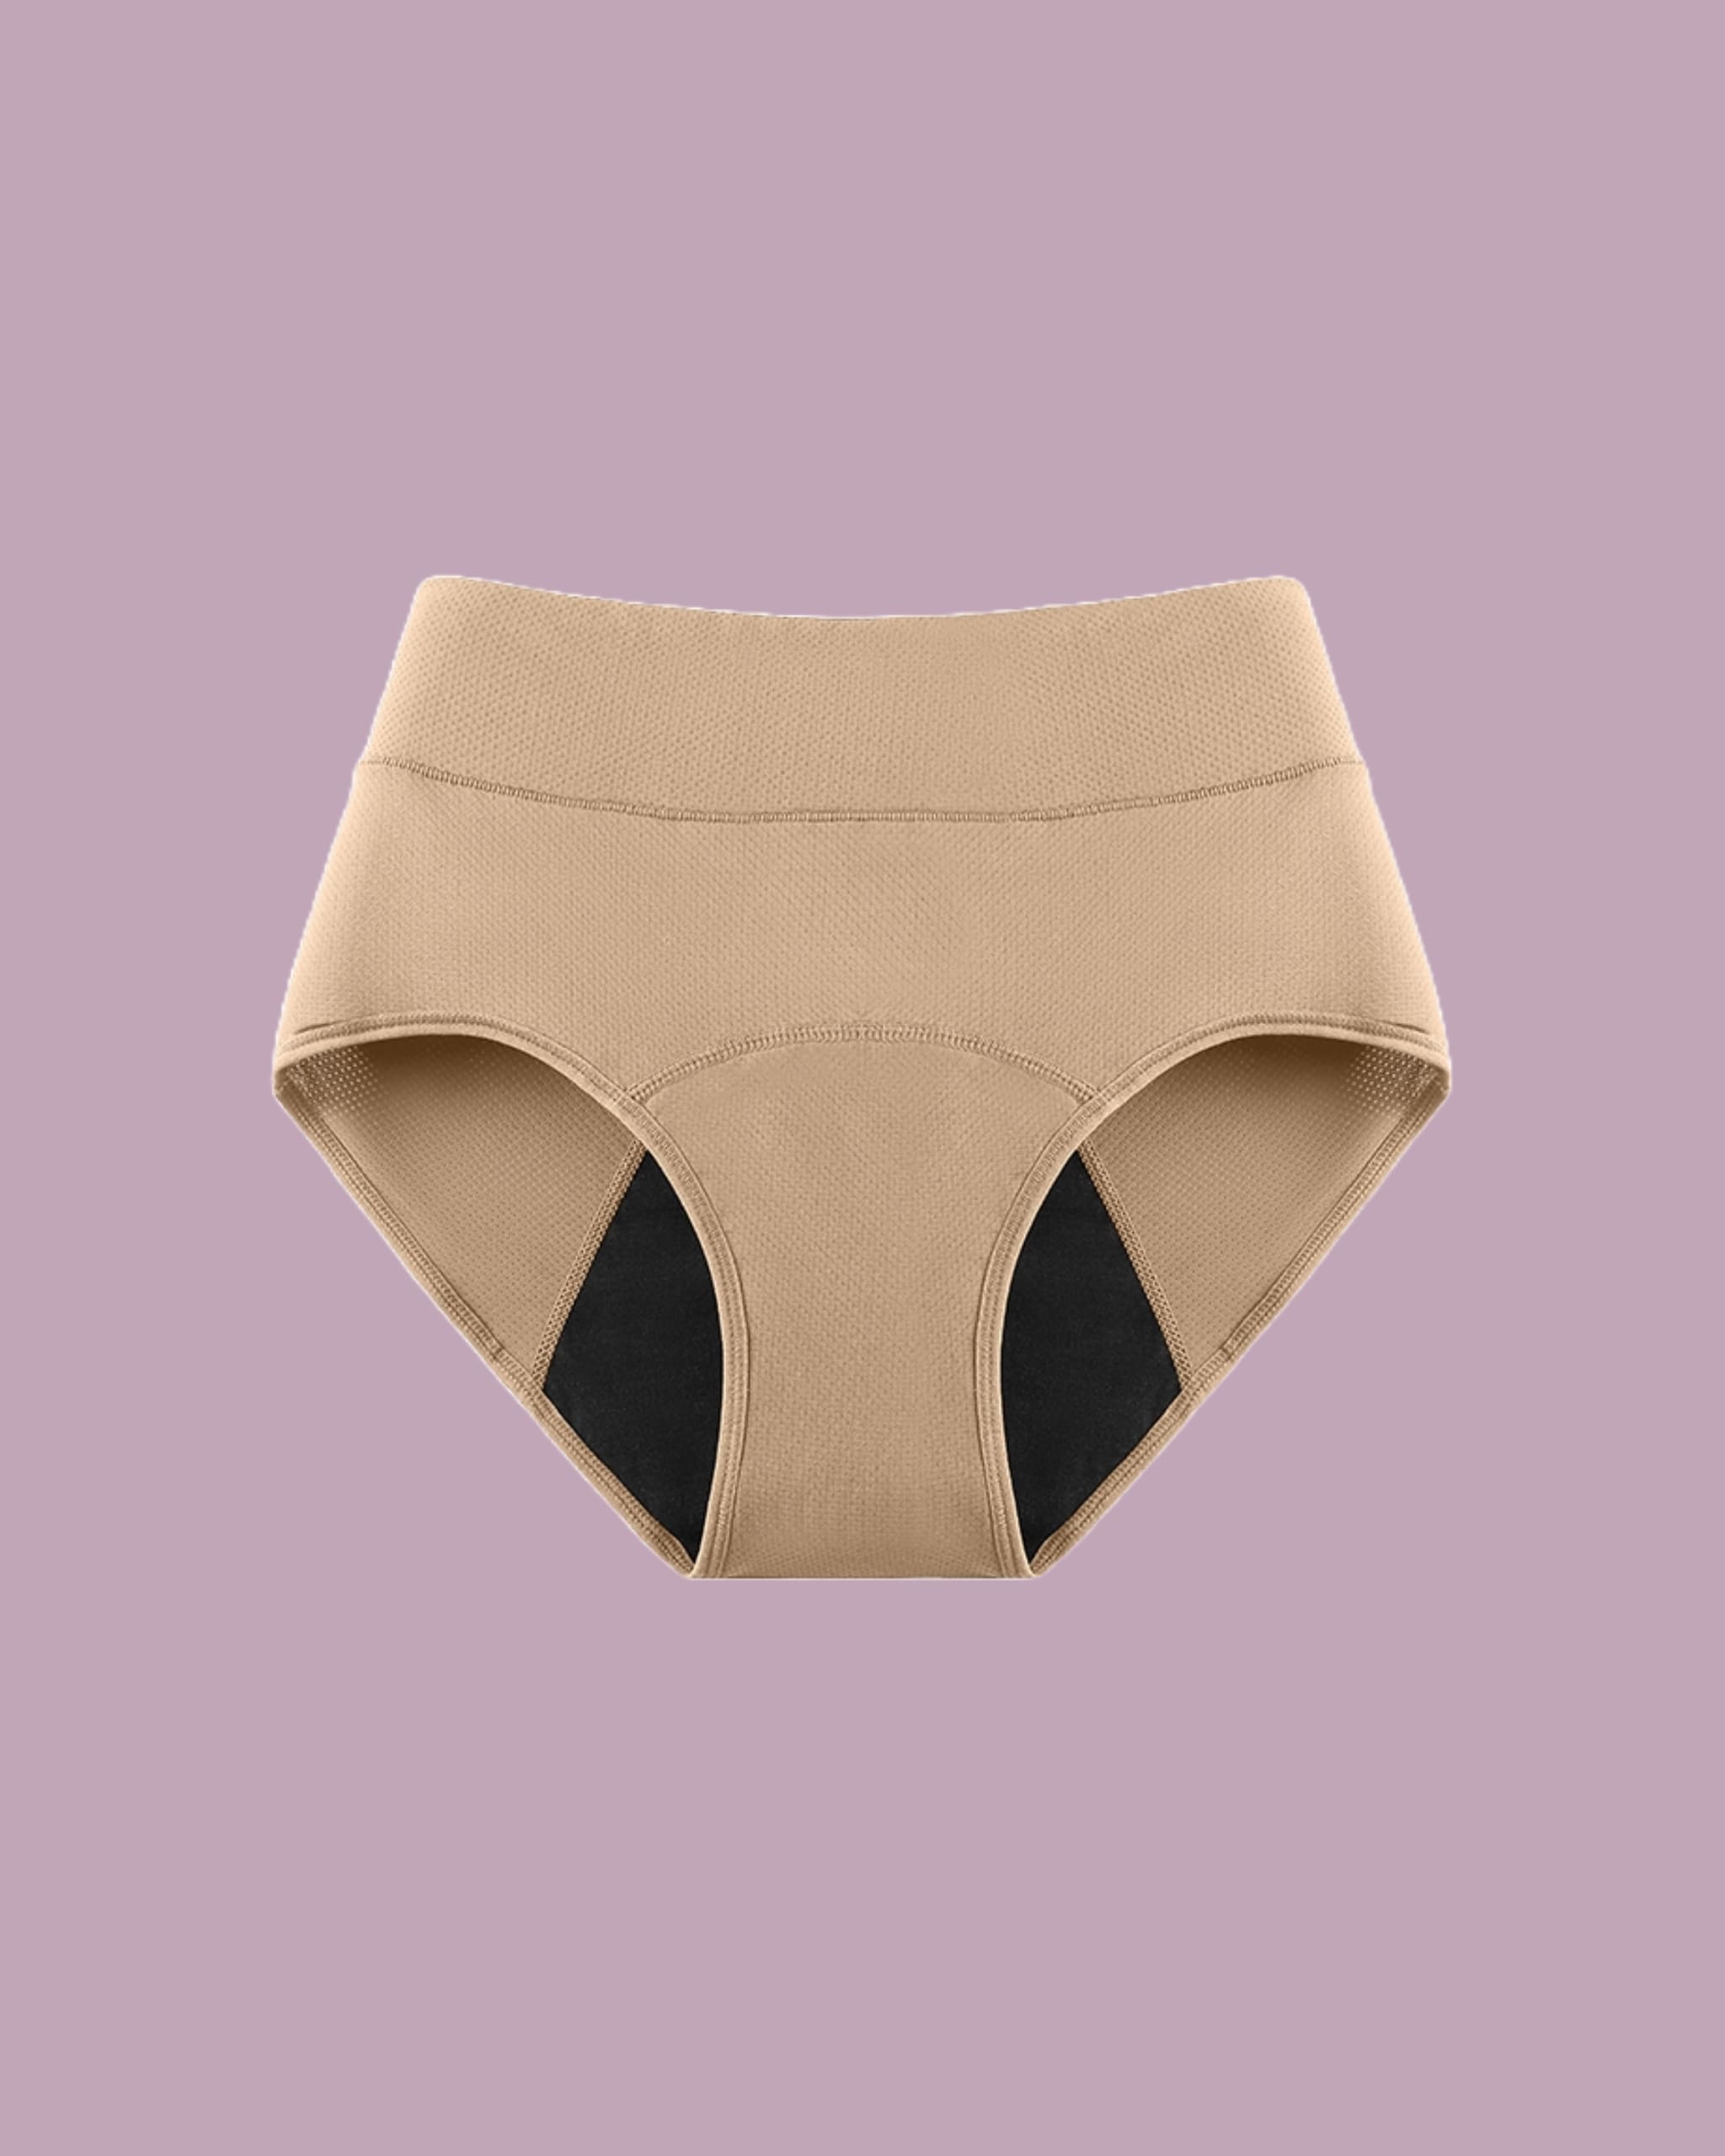 Baycosin Women's Glare Lace Panties Splice Non Rolling Leggings Tight  Underwear Pocket Shorts 